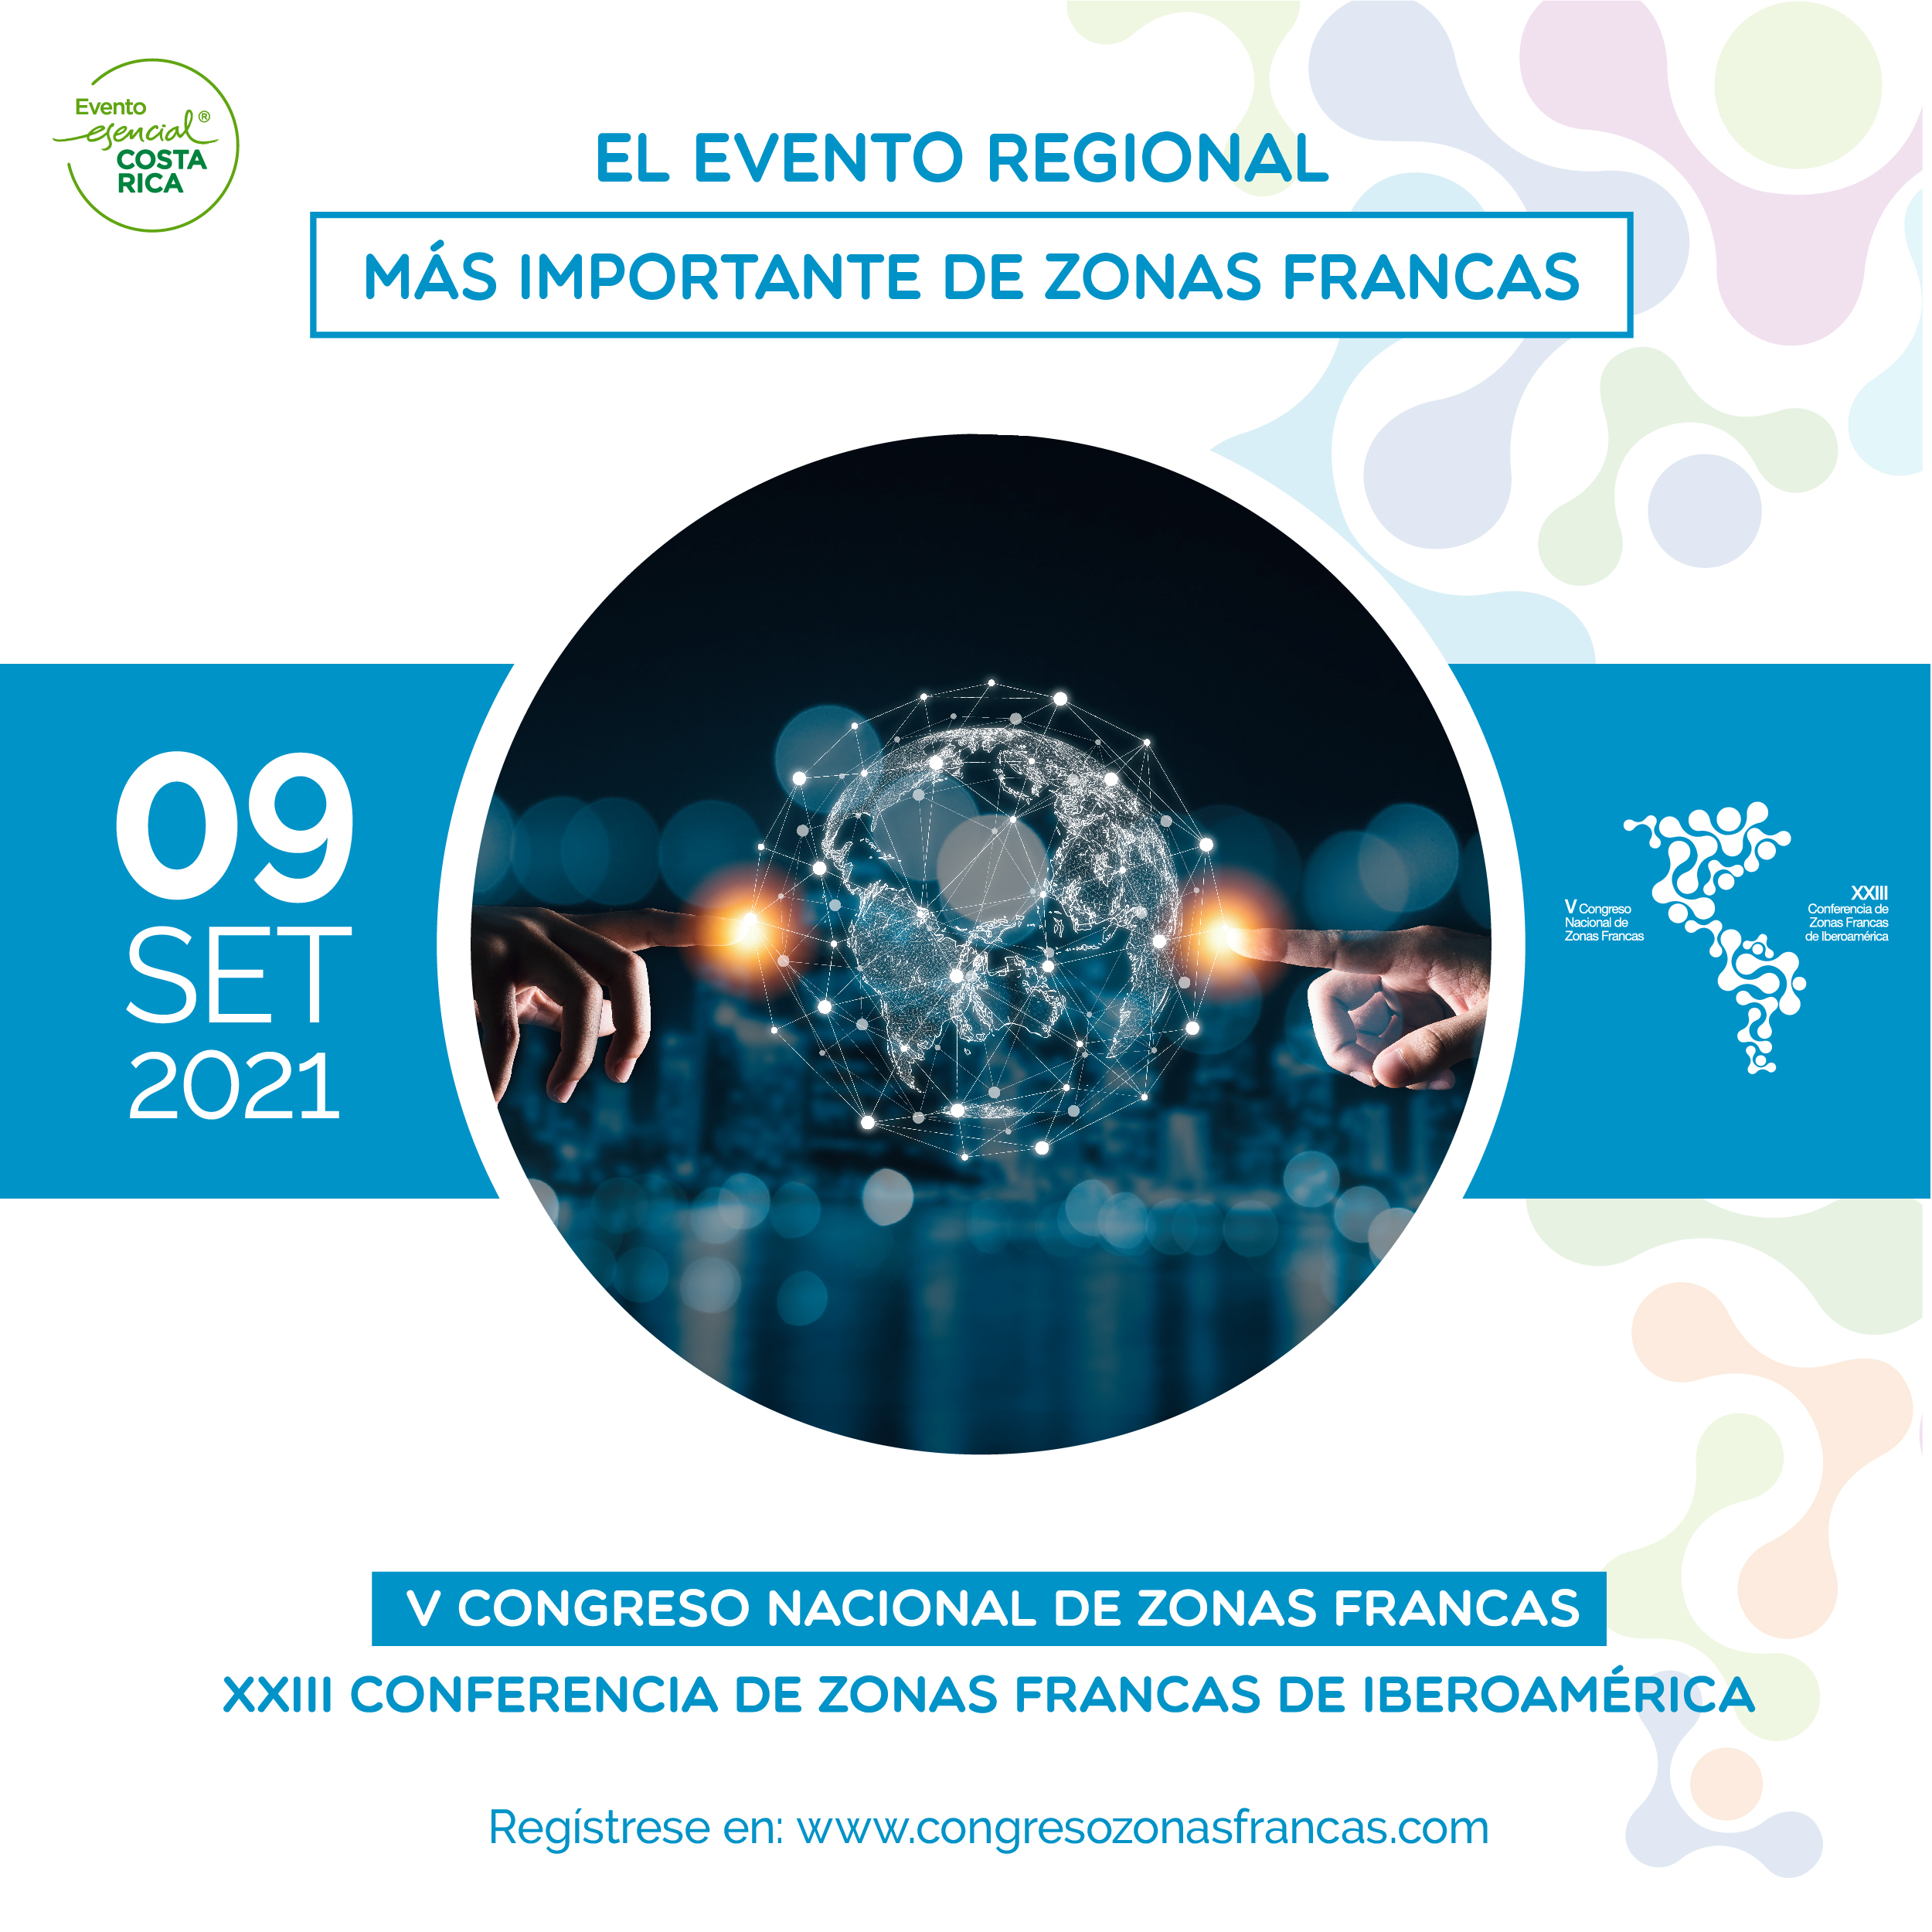 XXIII Conferencia de Zonas Francas de Iberoamérica